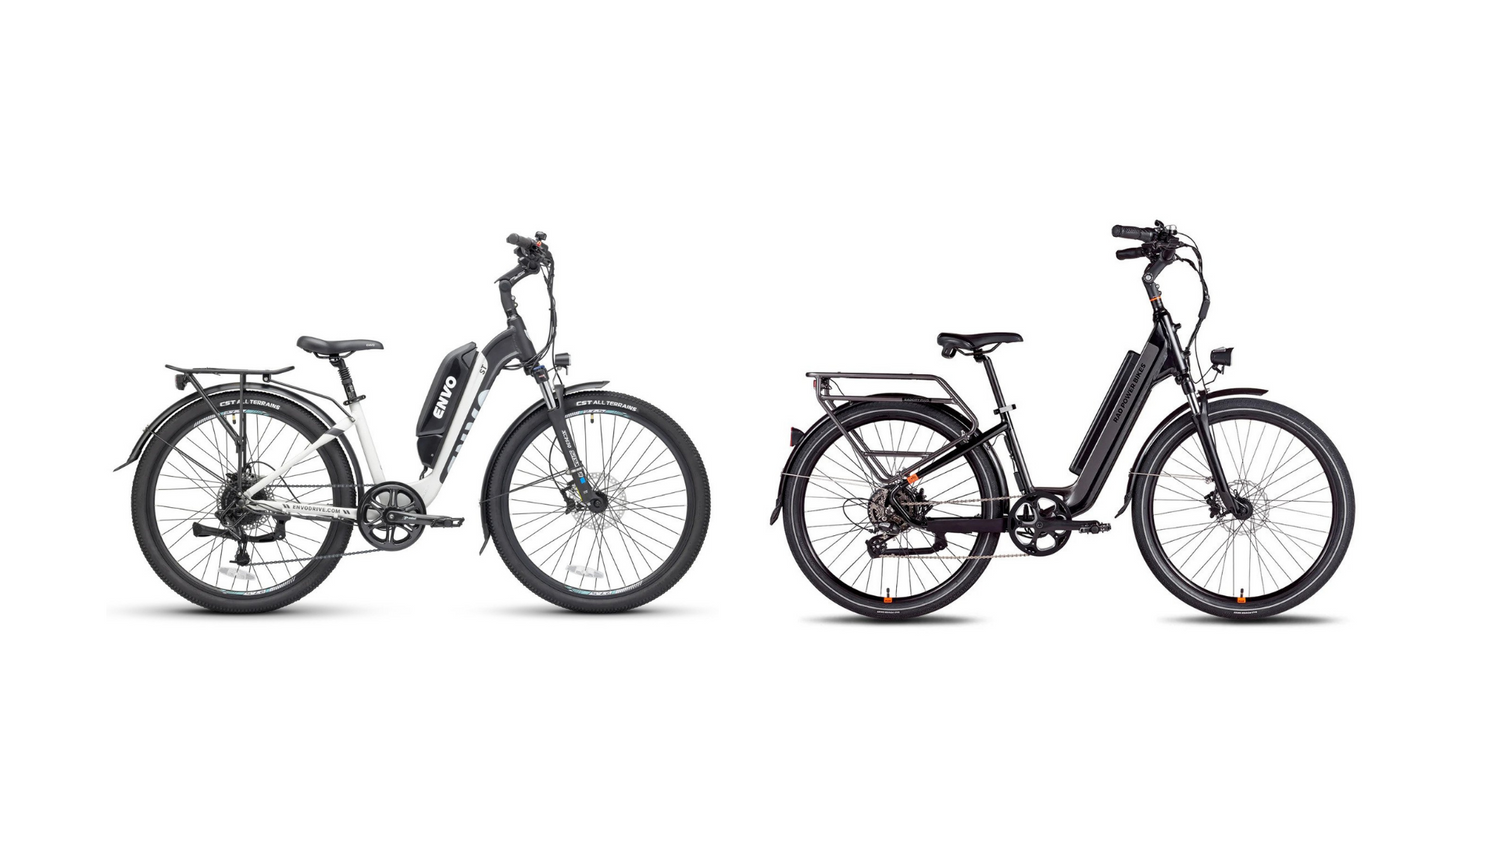 Comparing TOP Step-through electric bikes - ENVO ST vs RadCity5+